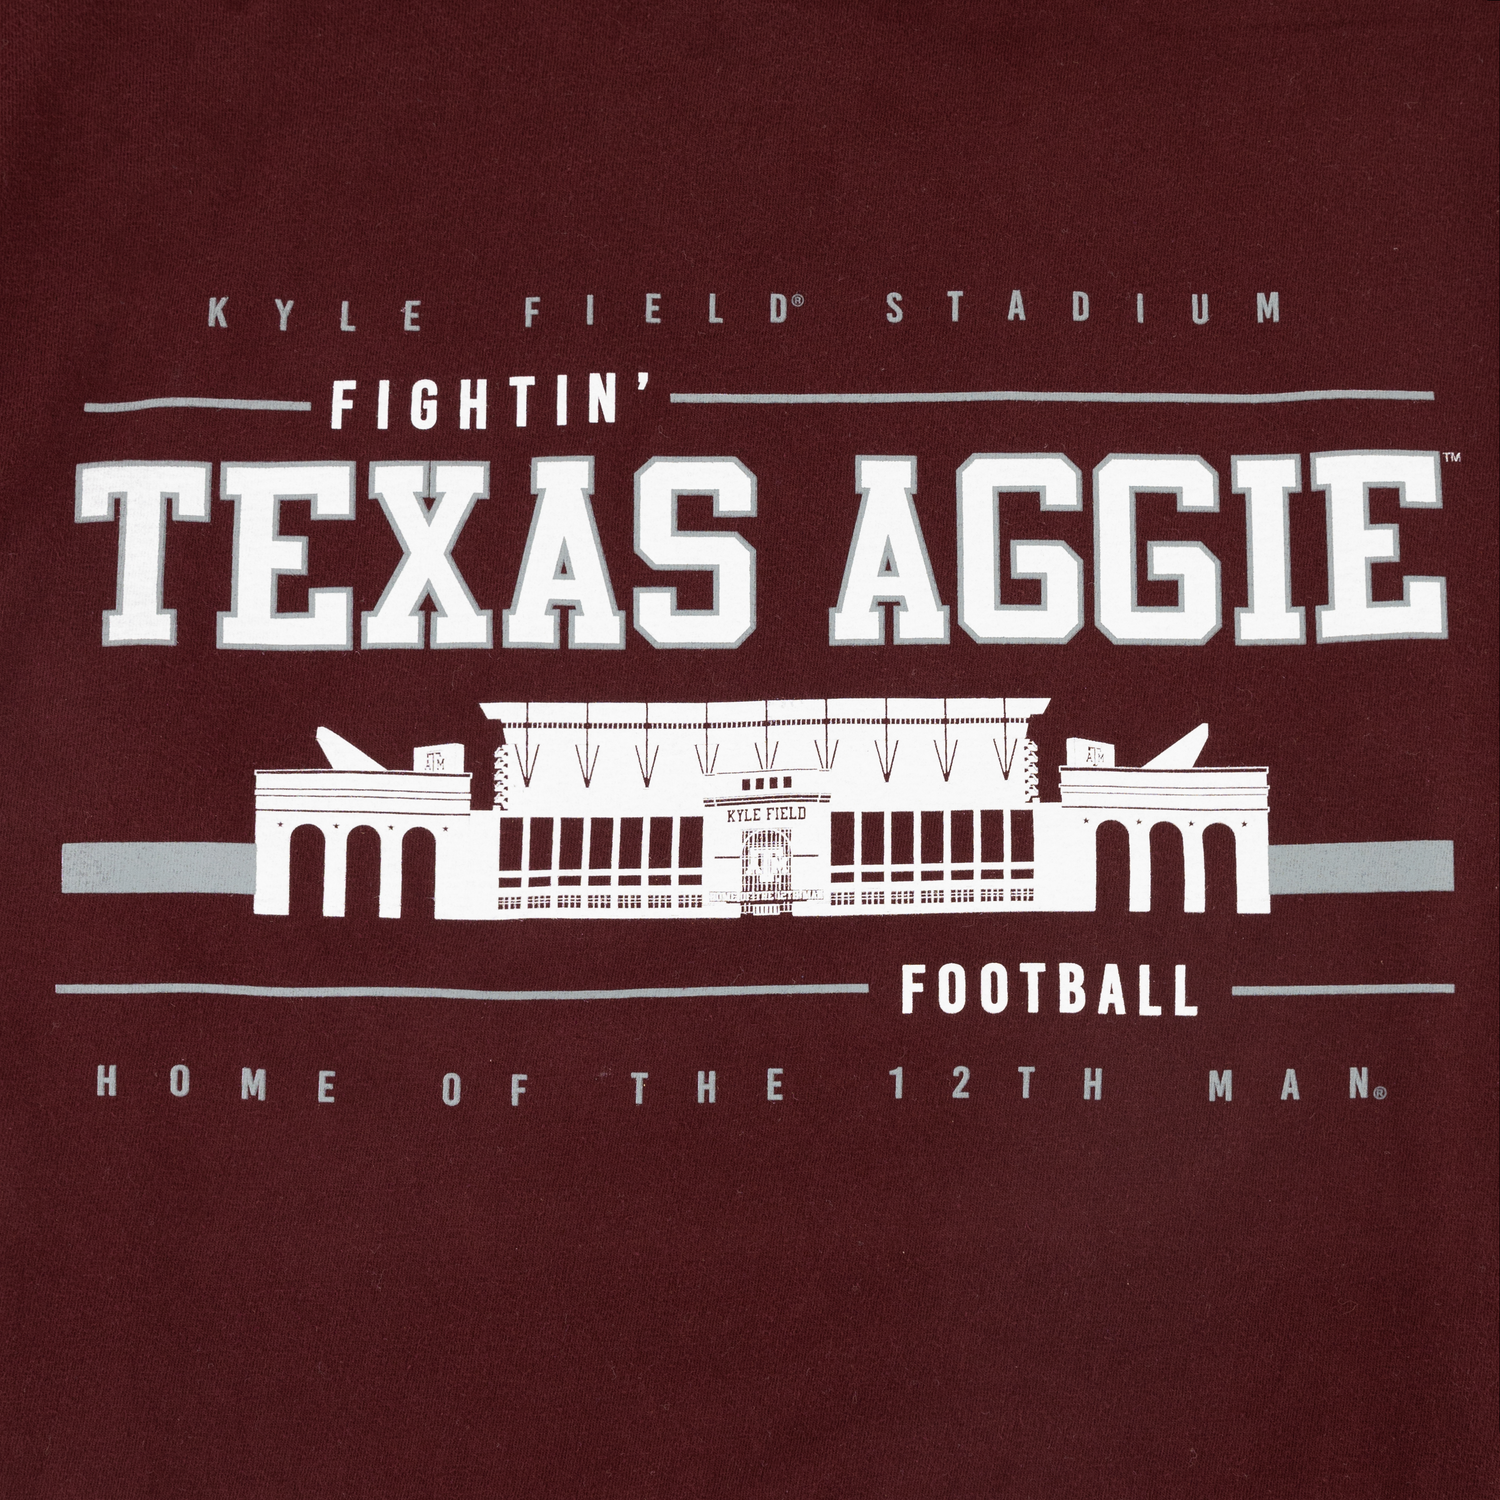 Texas Aggie Stadium T-Shirt